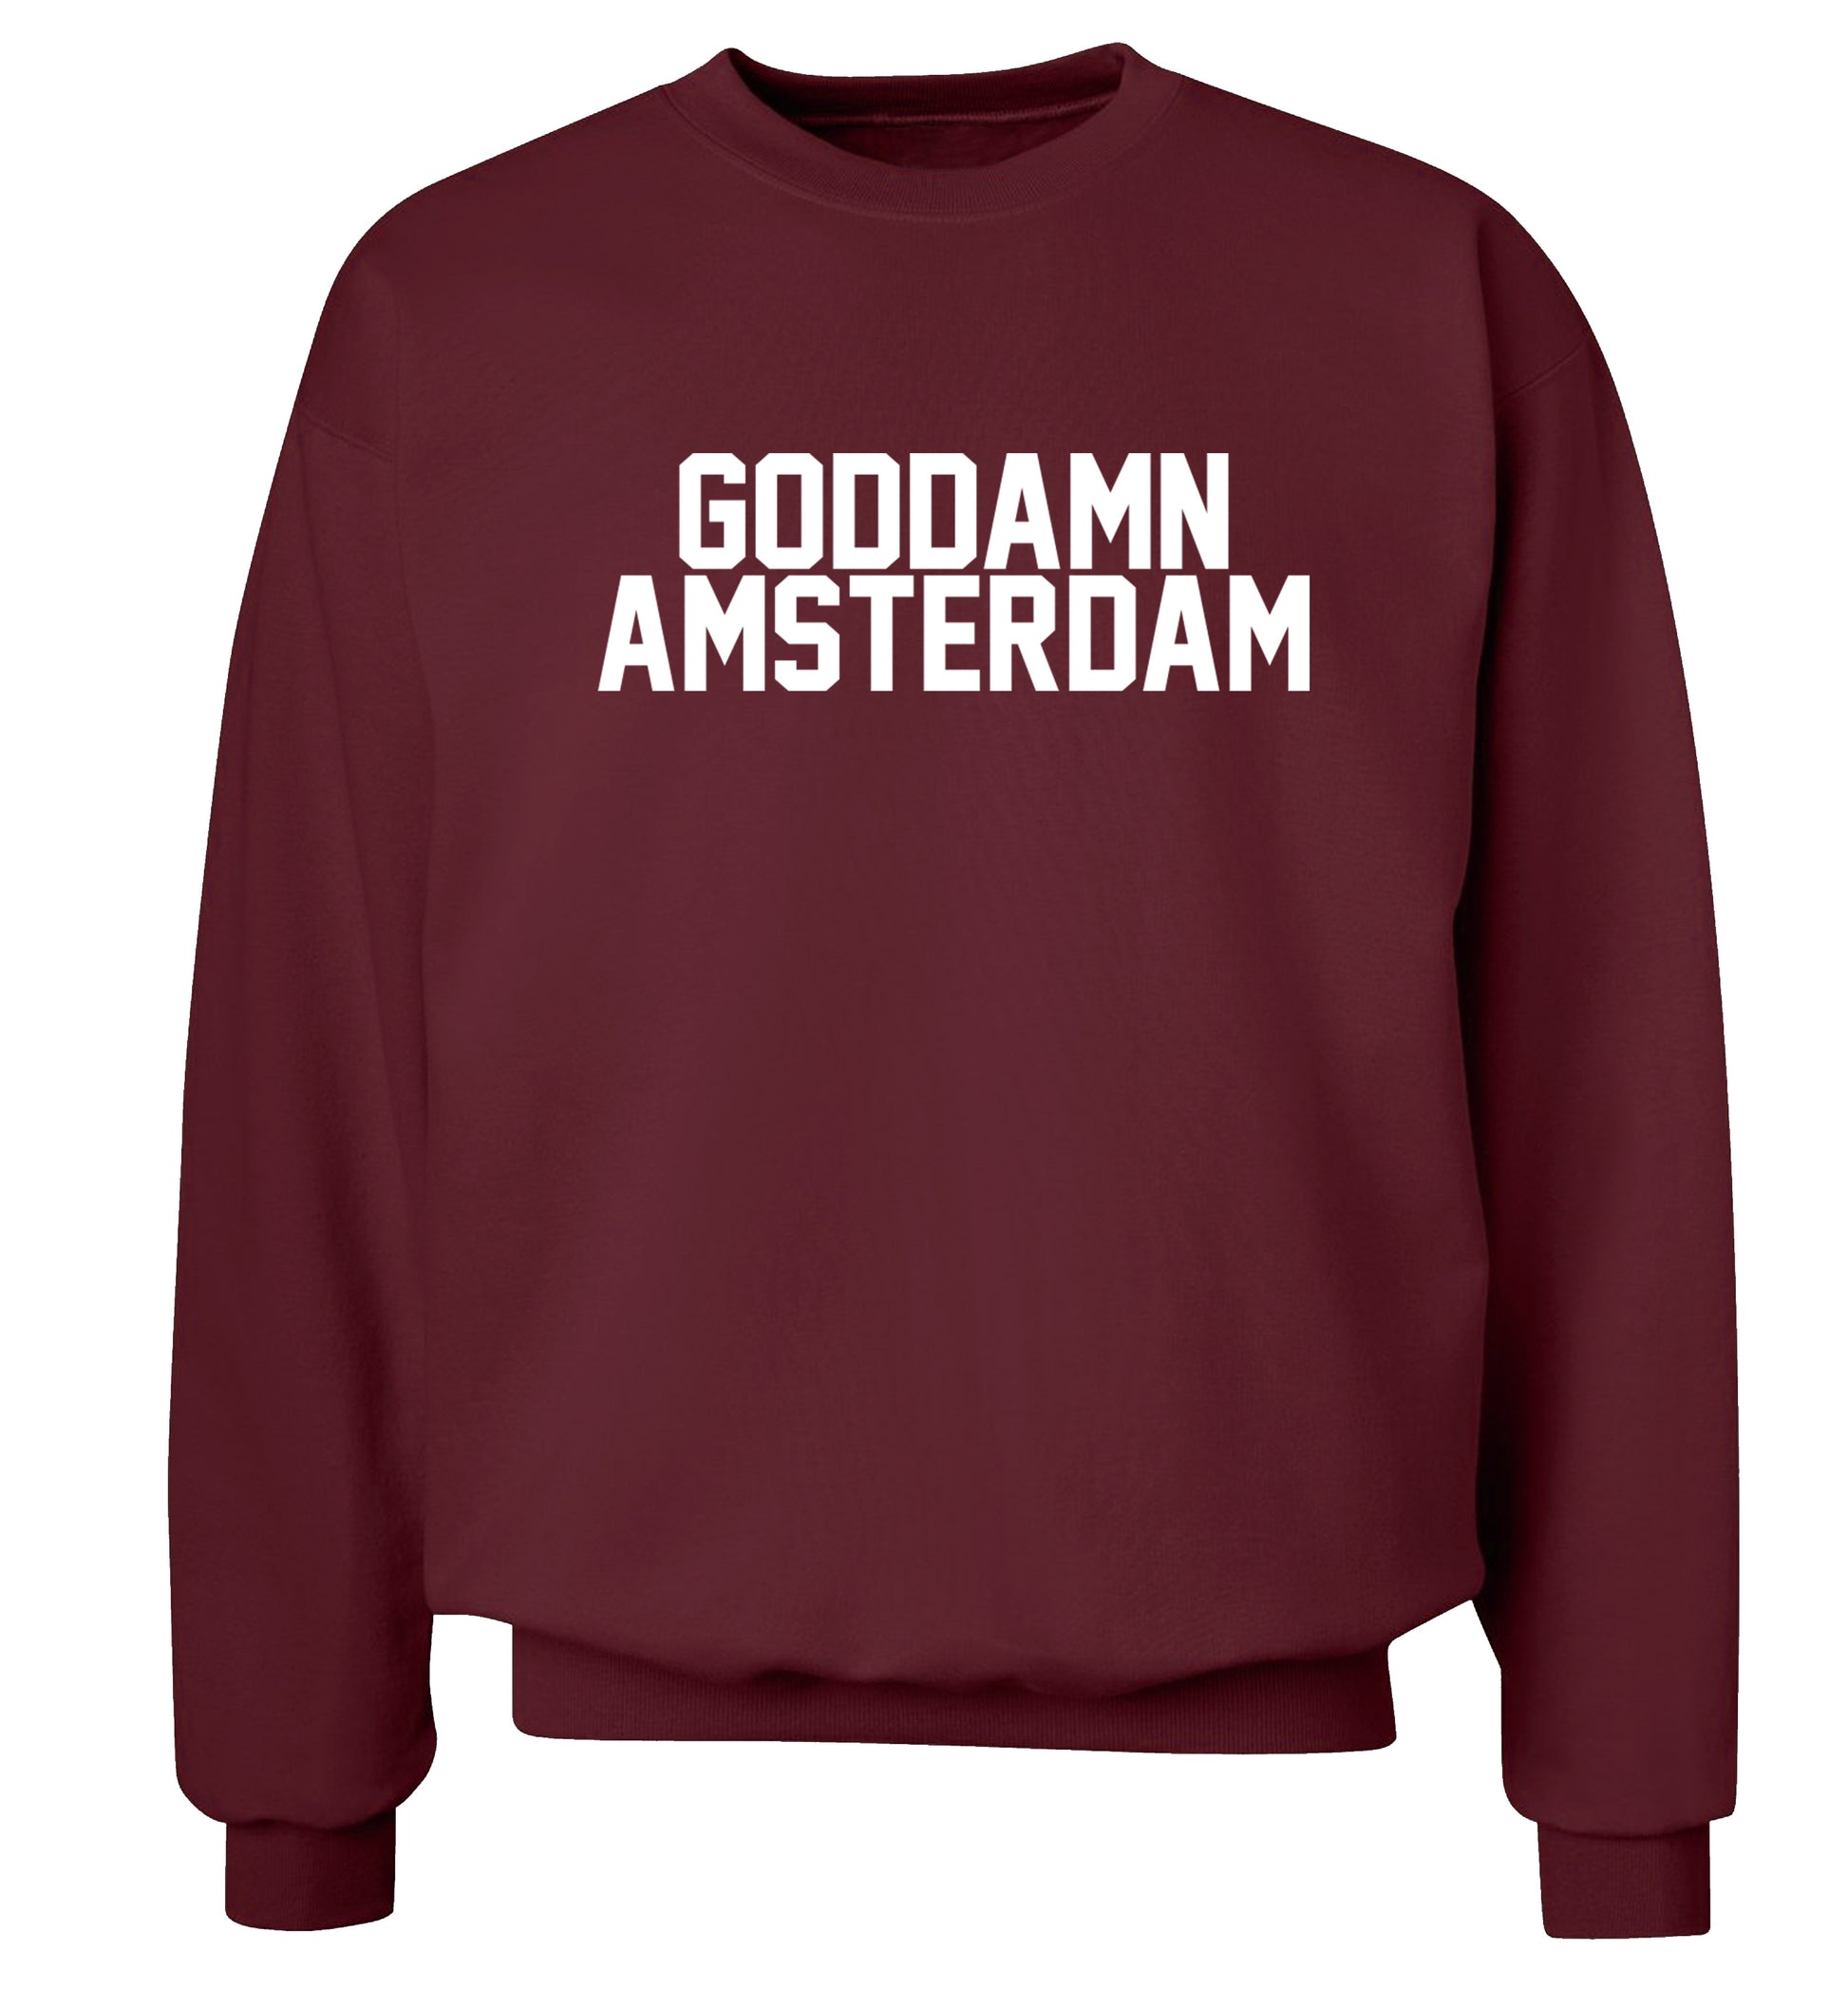 Goddamn Amsterdam Adult's unisex maroon Sweater 2XL